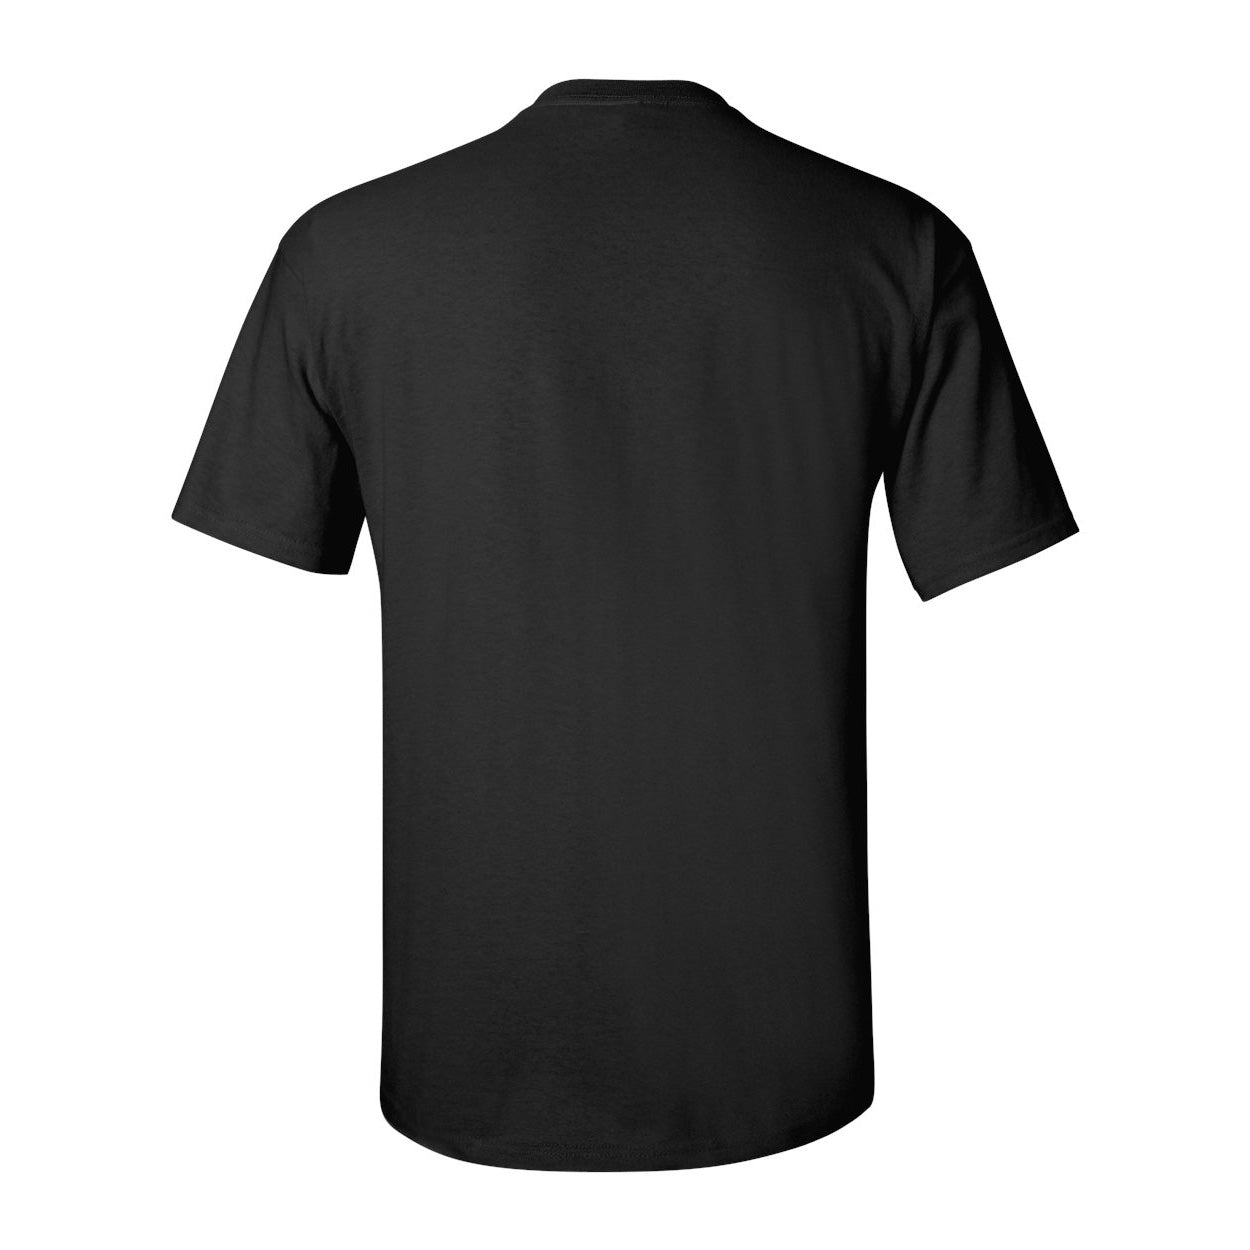 EthereumMax Geometric Design Crew Neck T-Shirt